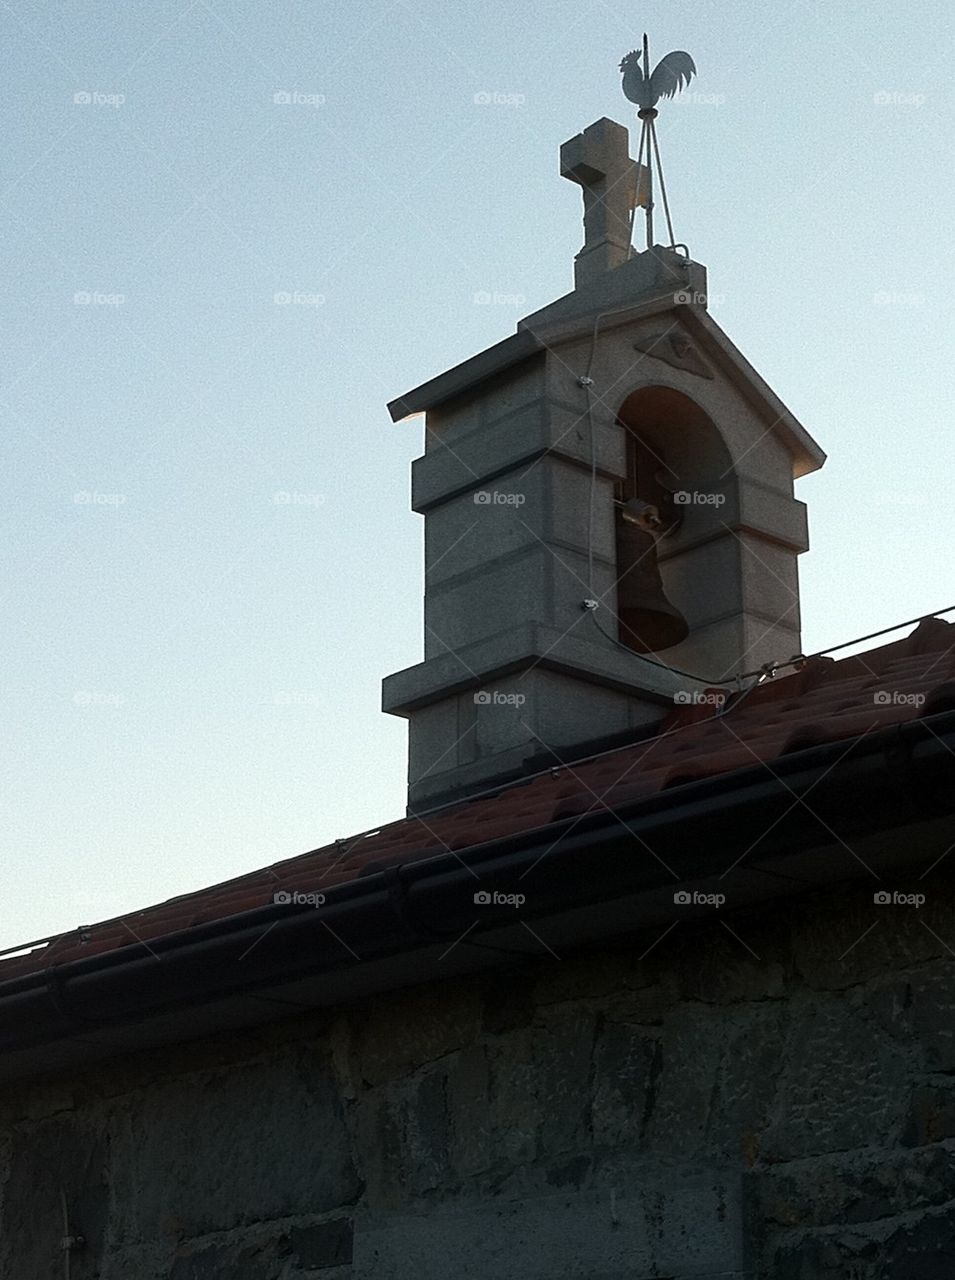 Roof with wind vane